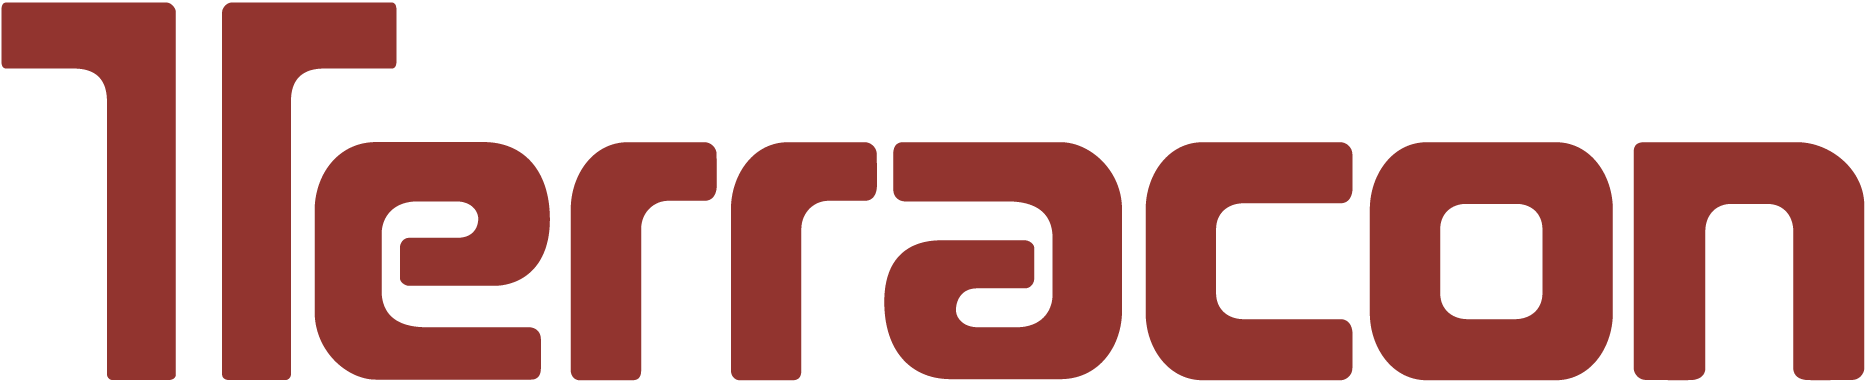 Terracon Consultants, Inc. logo